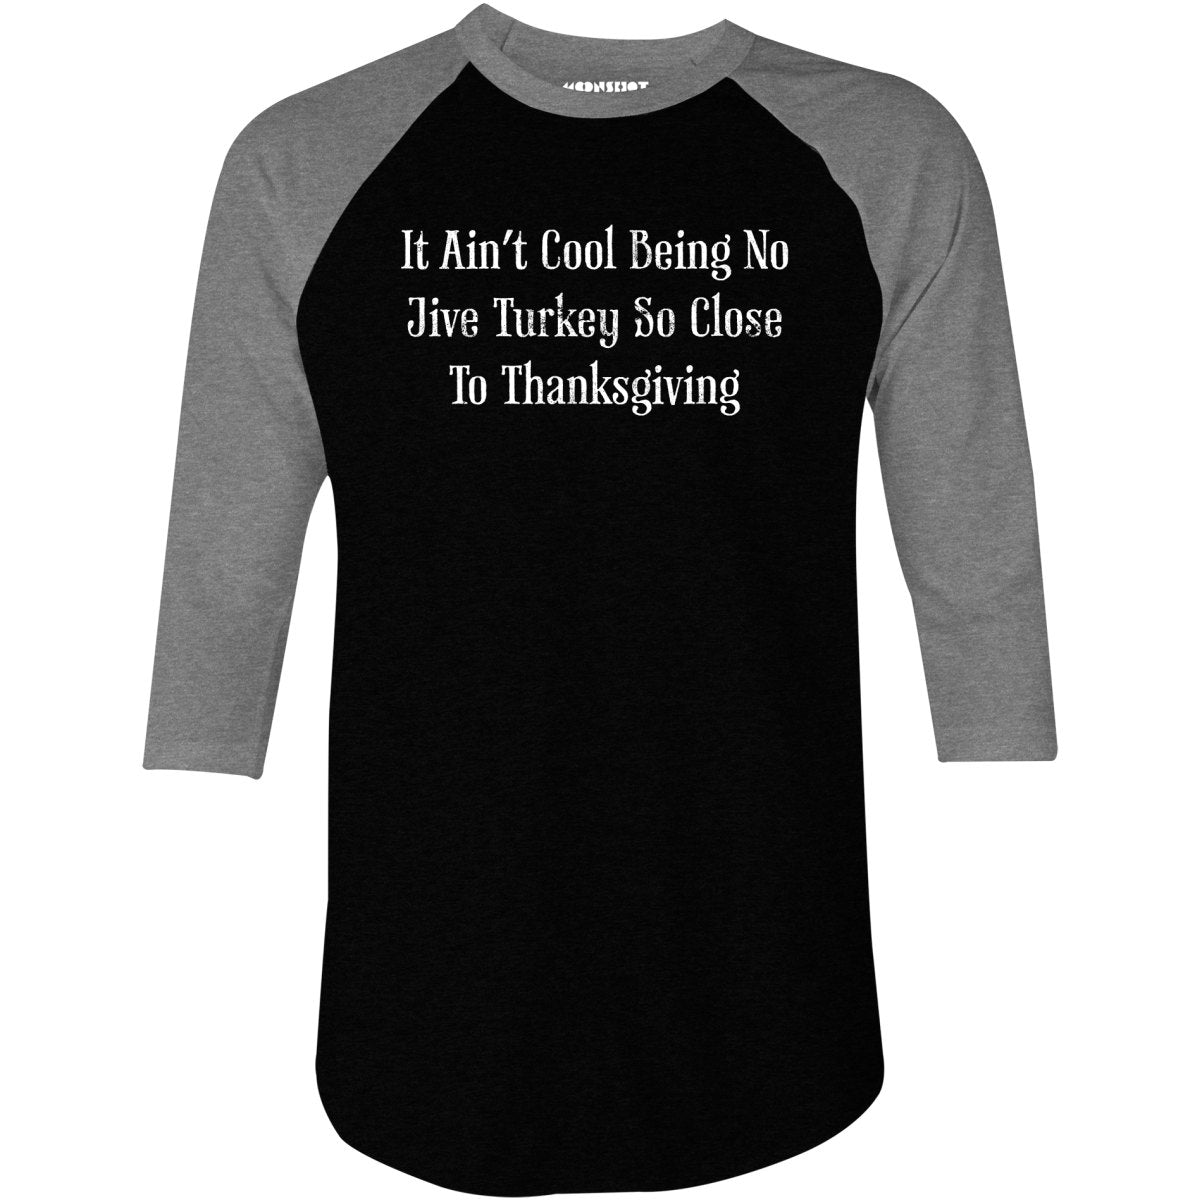 It Ain't Cool Being No Jive Turkey So Close to Thanksgiving - 3/4 Sleeve Raglan T-Shirt